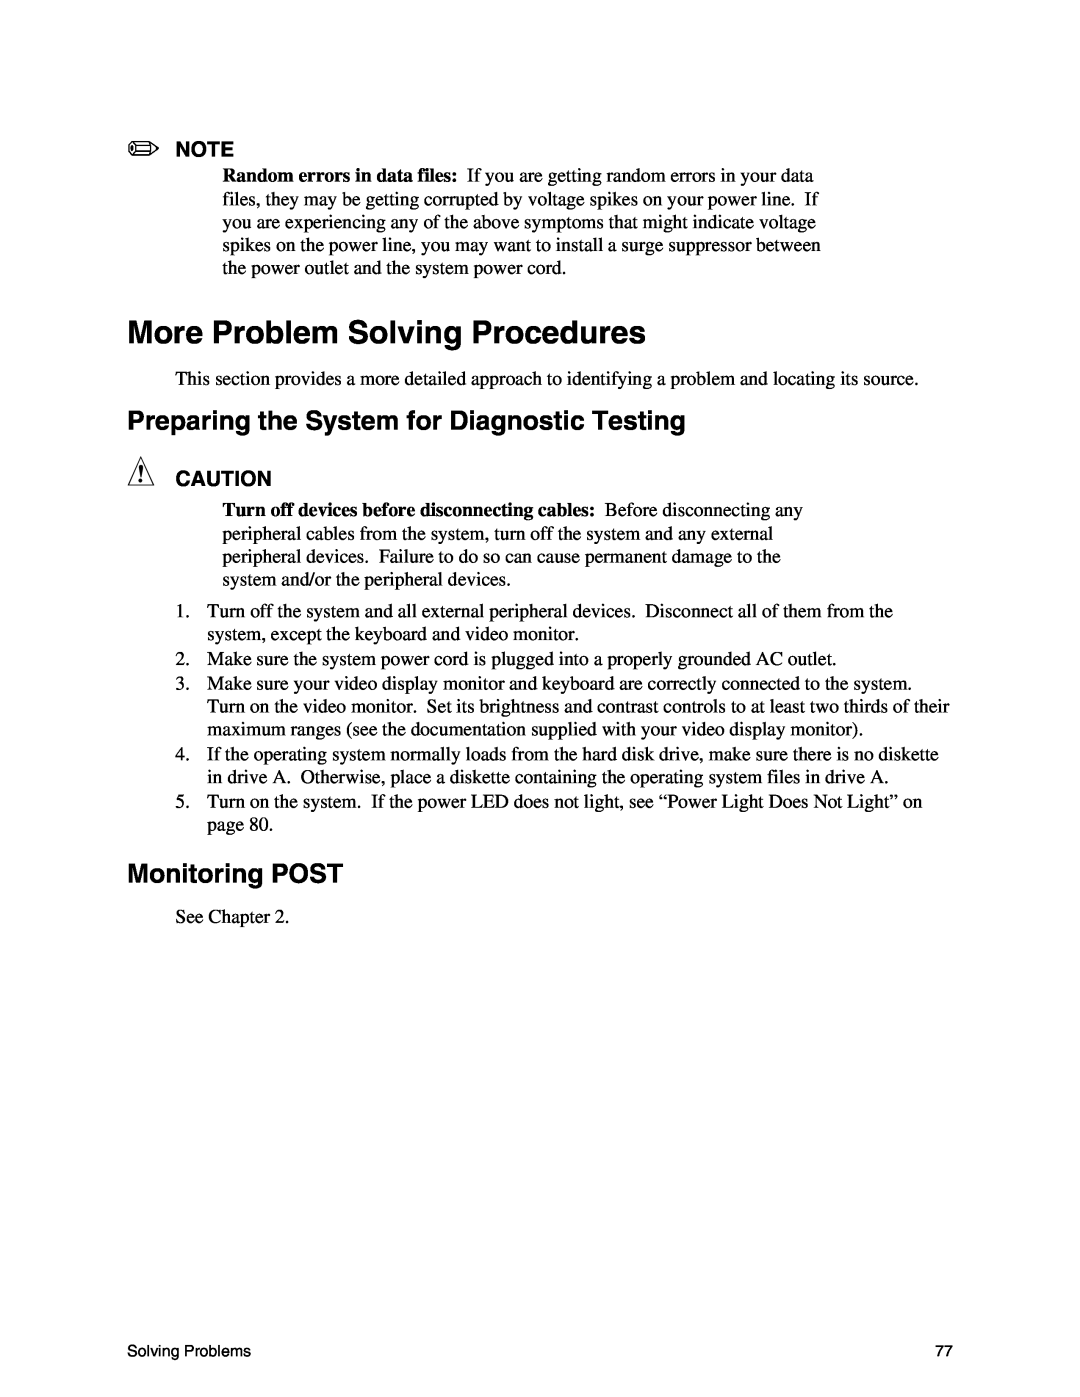 Intel SE7500CW2 manual More Problem Solving Procedures, Preparing the System for Diagnostic Testing, Monitoring POST 